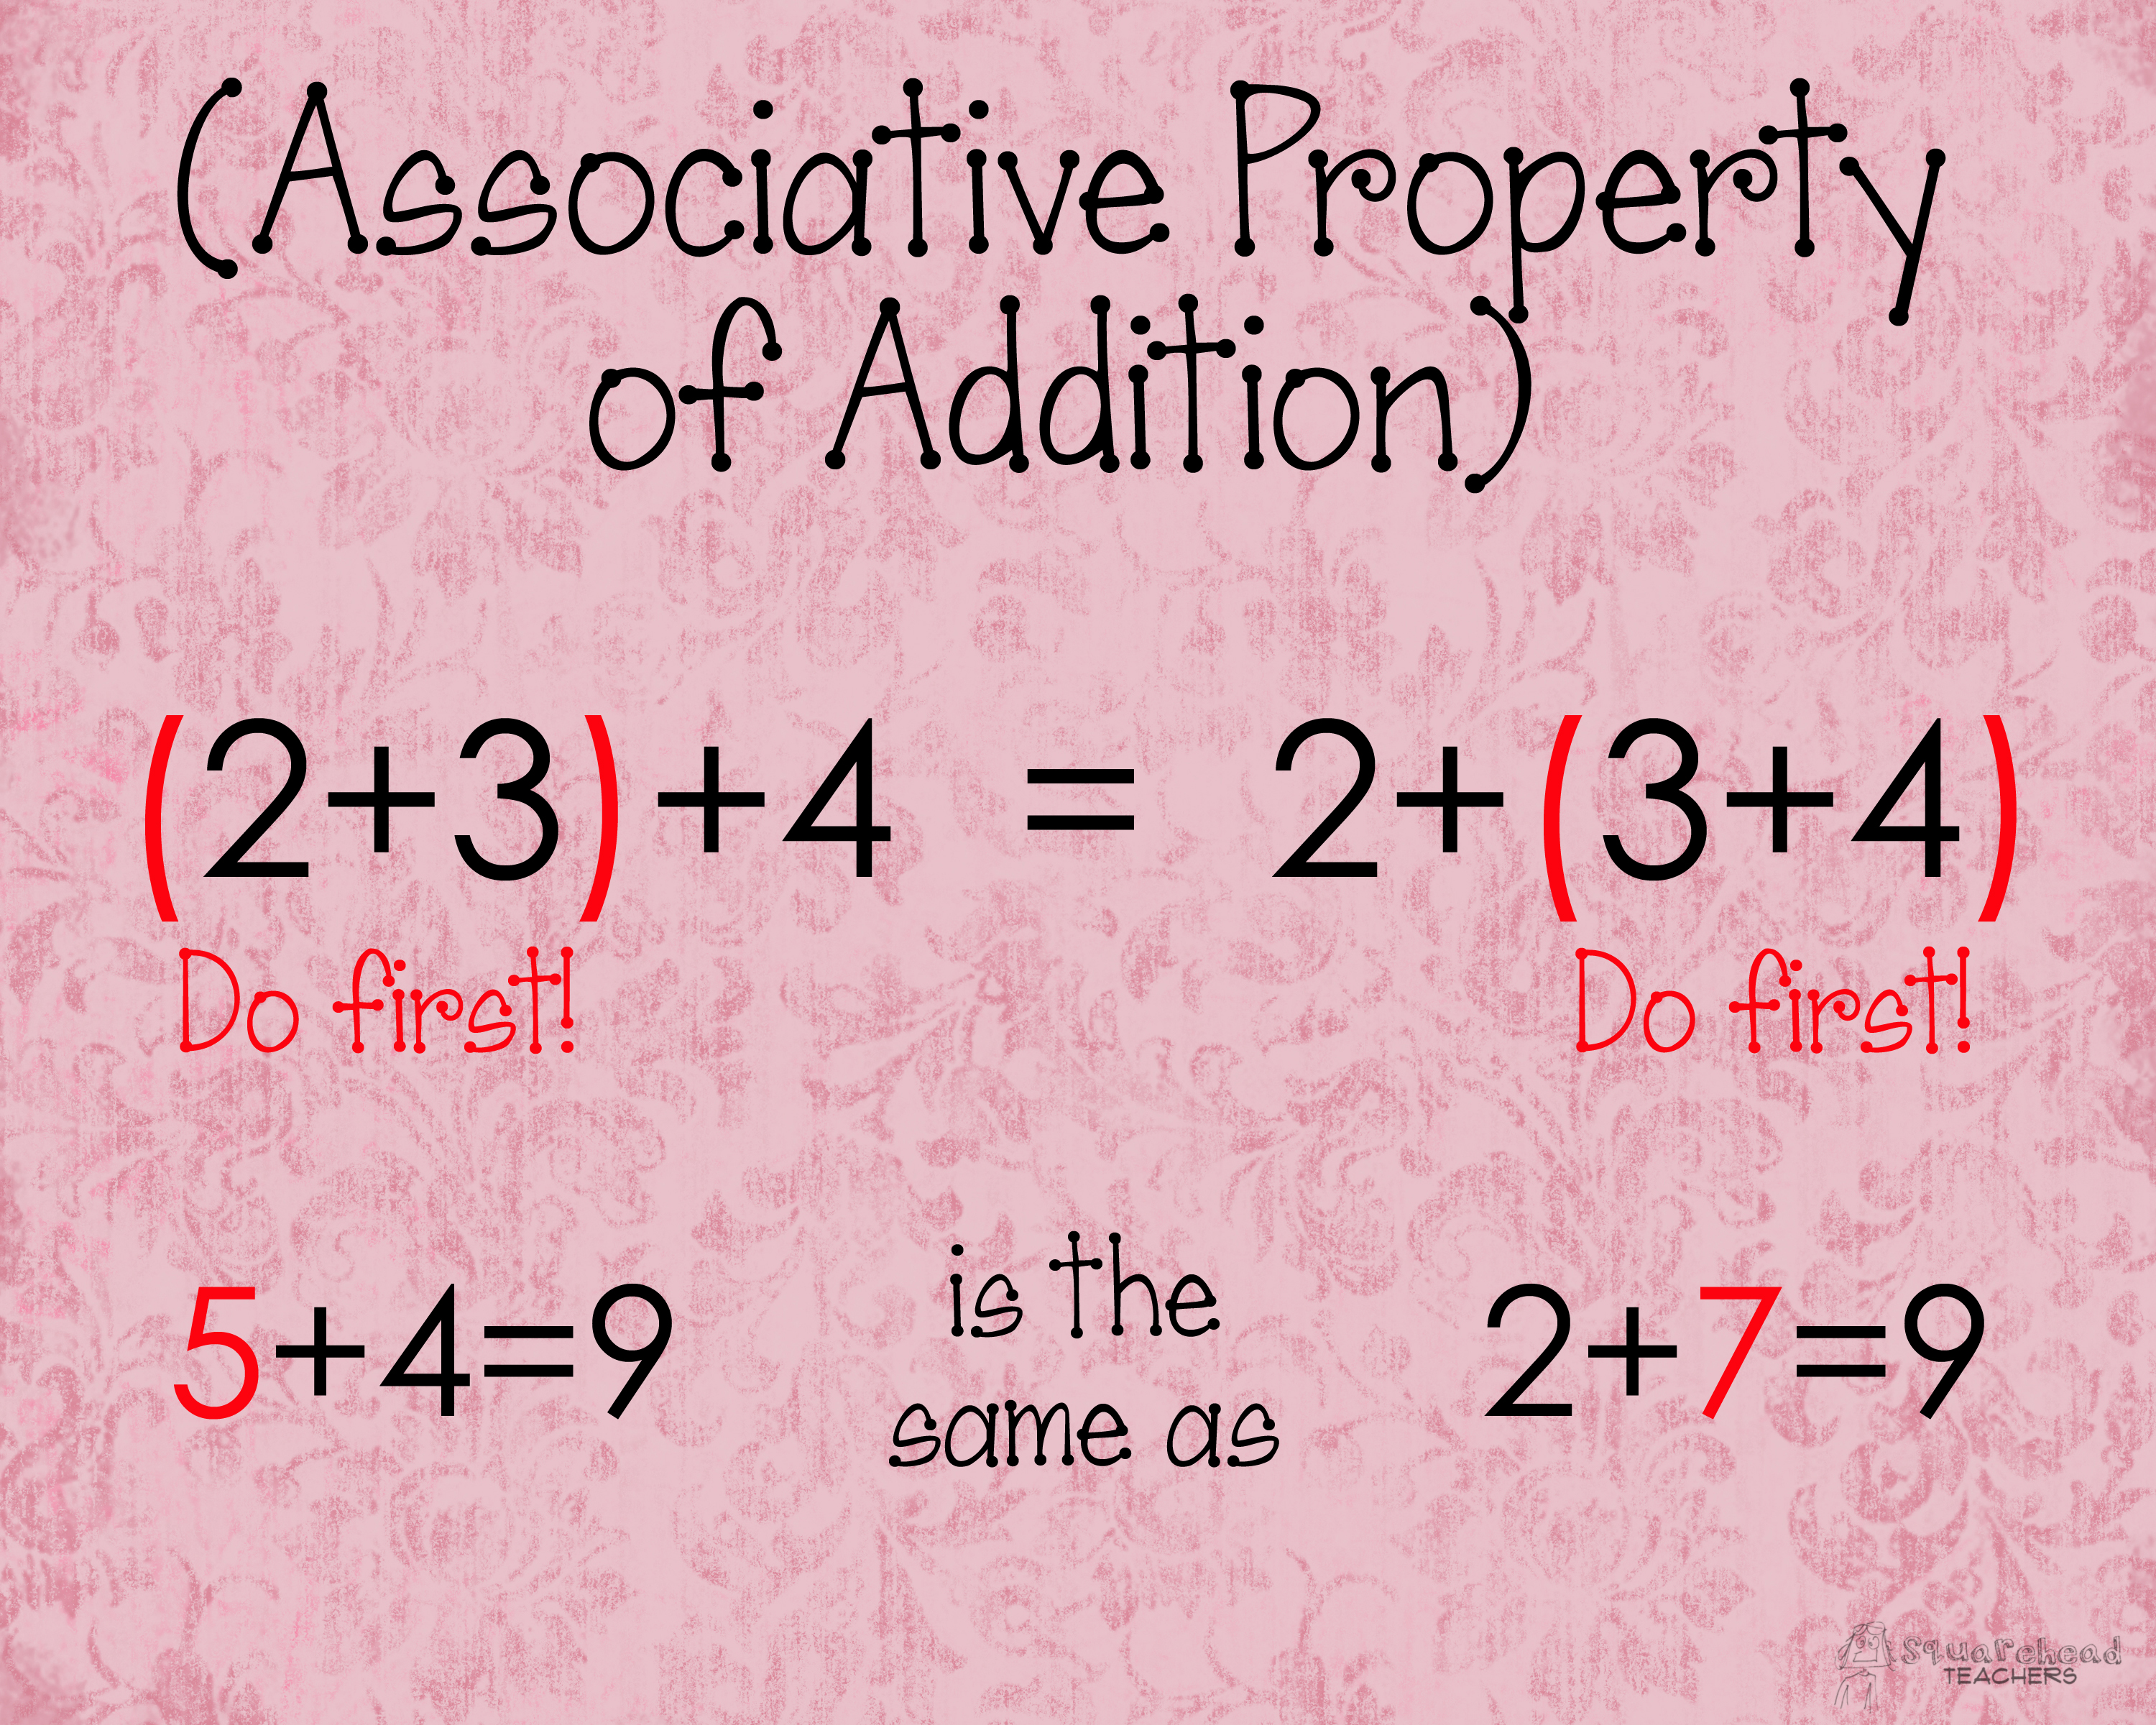 associative-property-of-addition-poster-squarehead-teachers